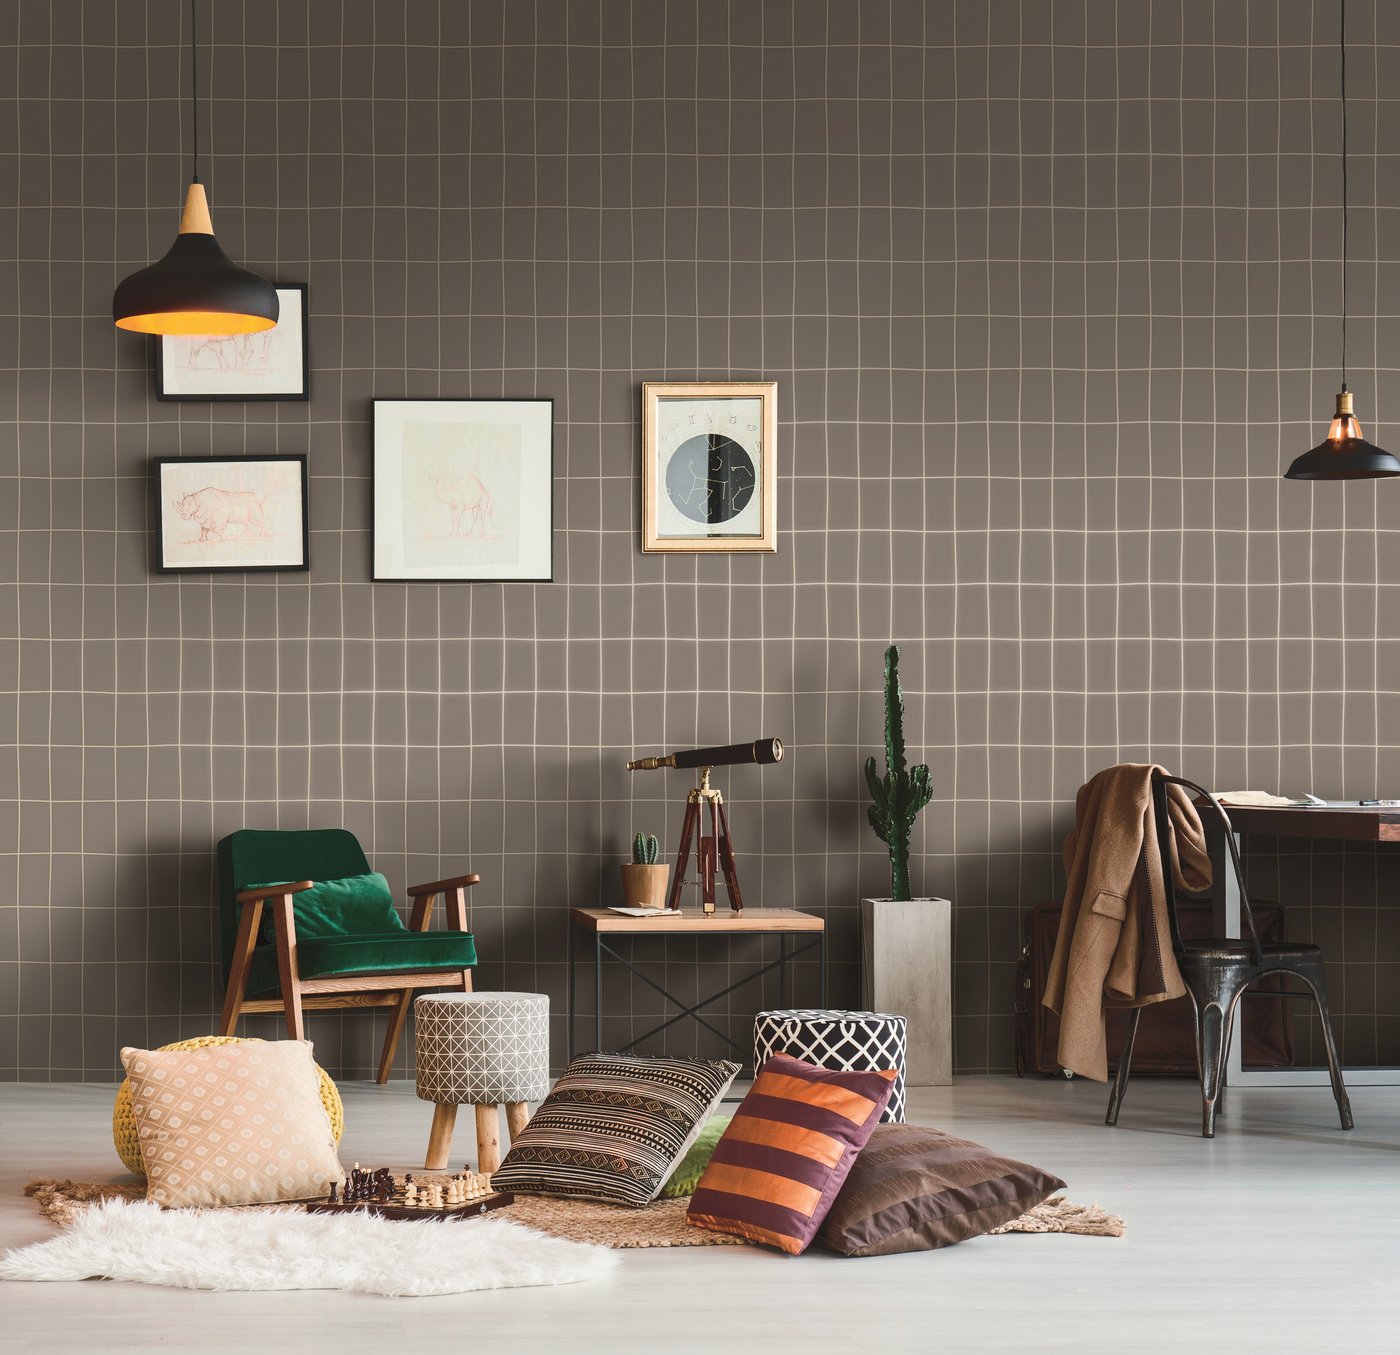 wallpaper dinding,wall,room,furniture,interior design,brown